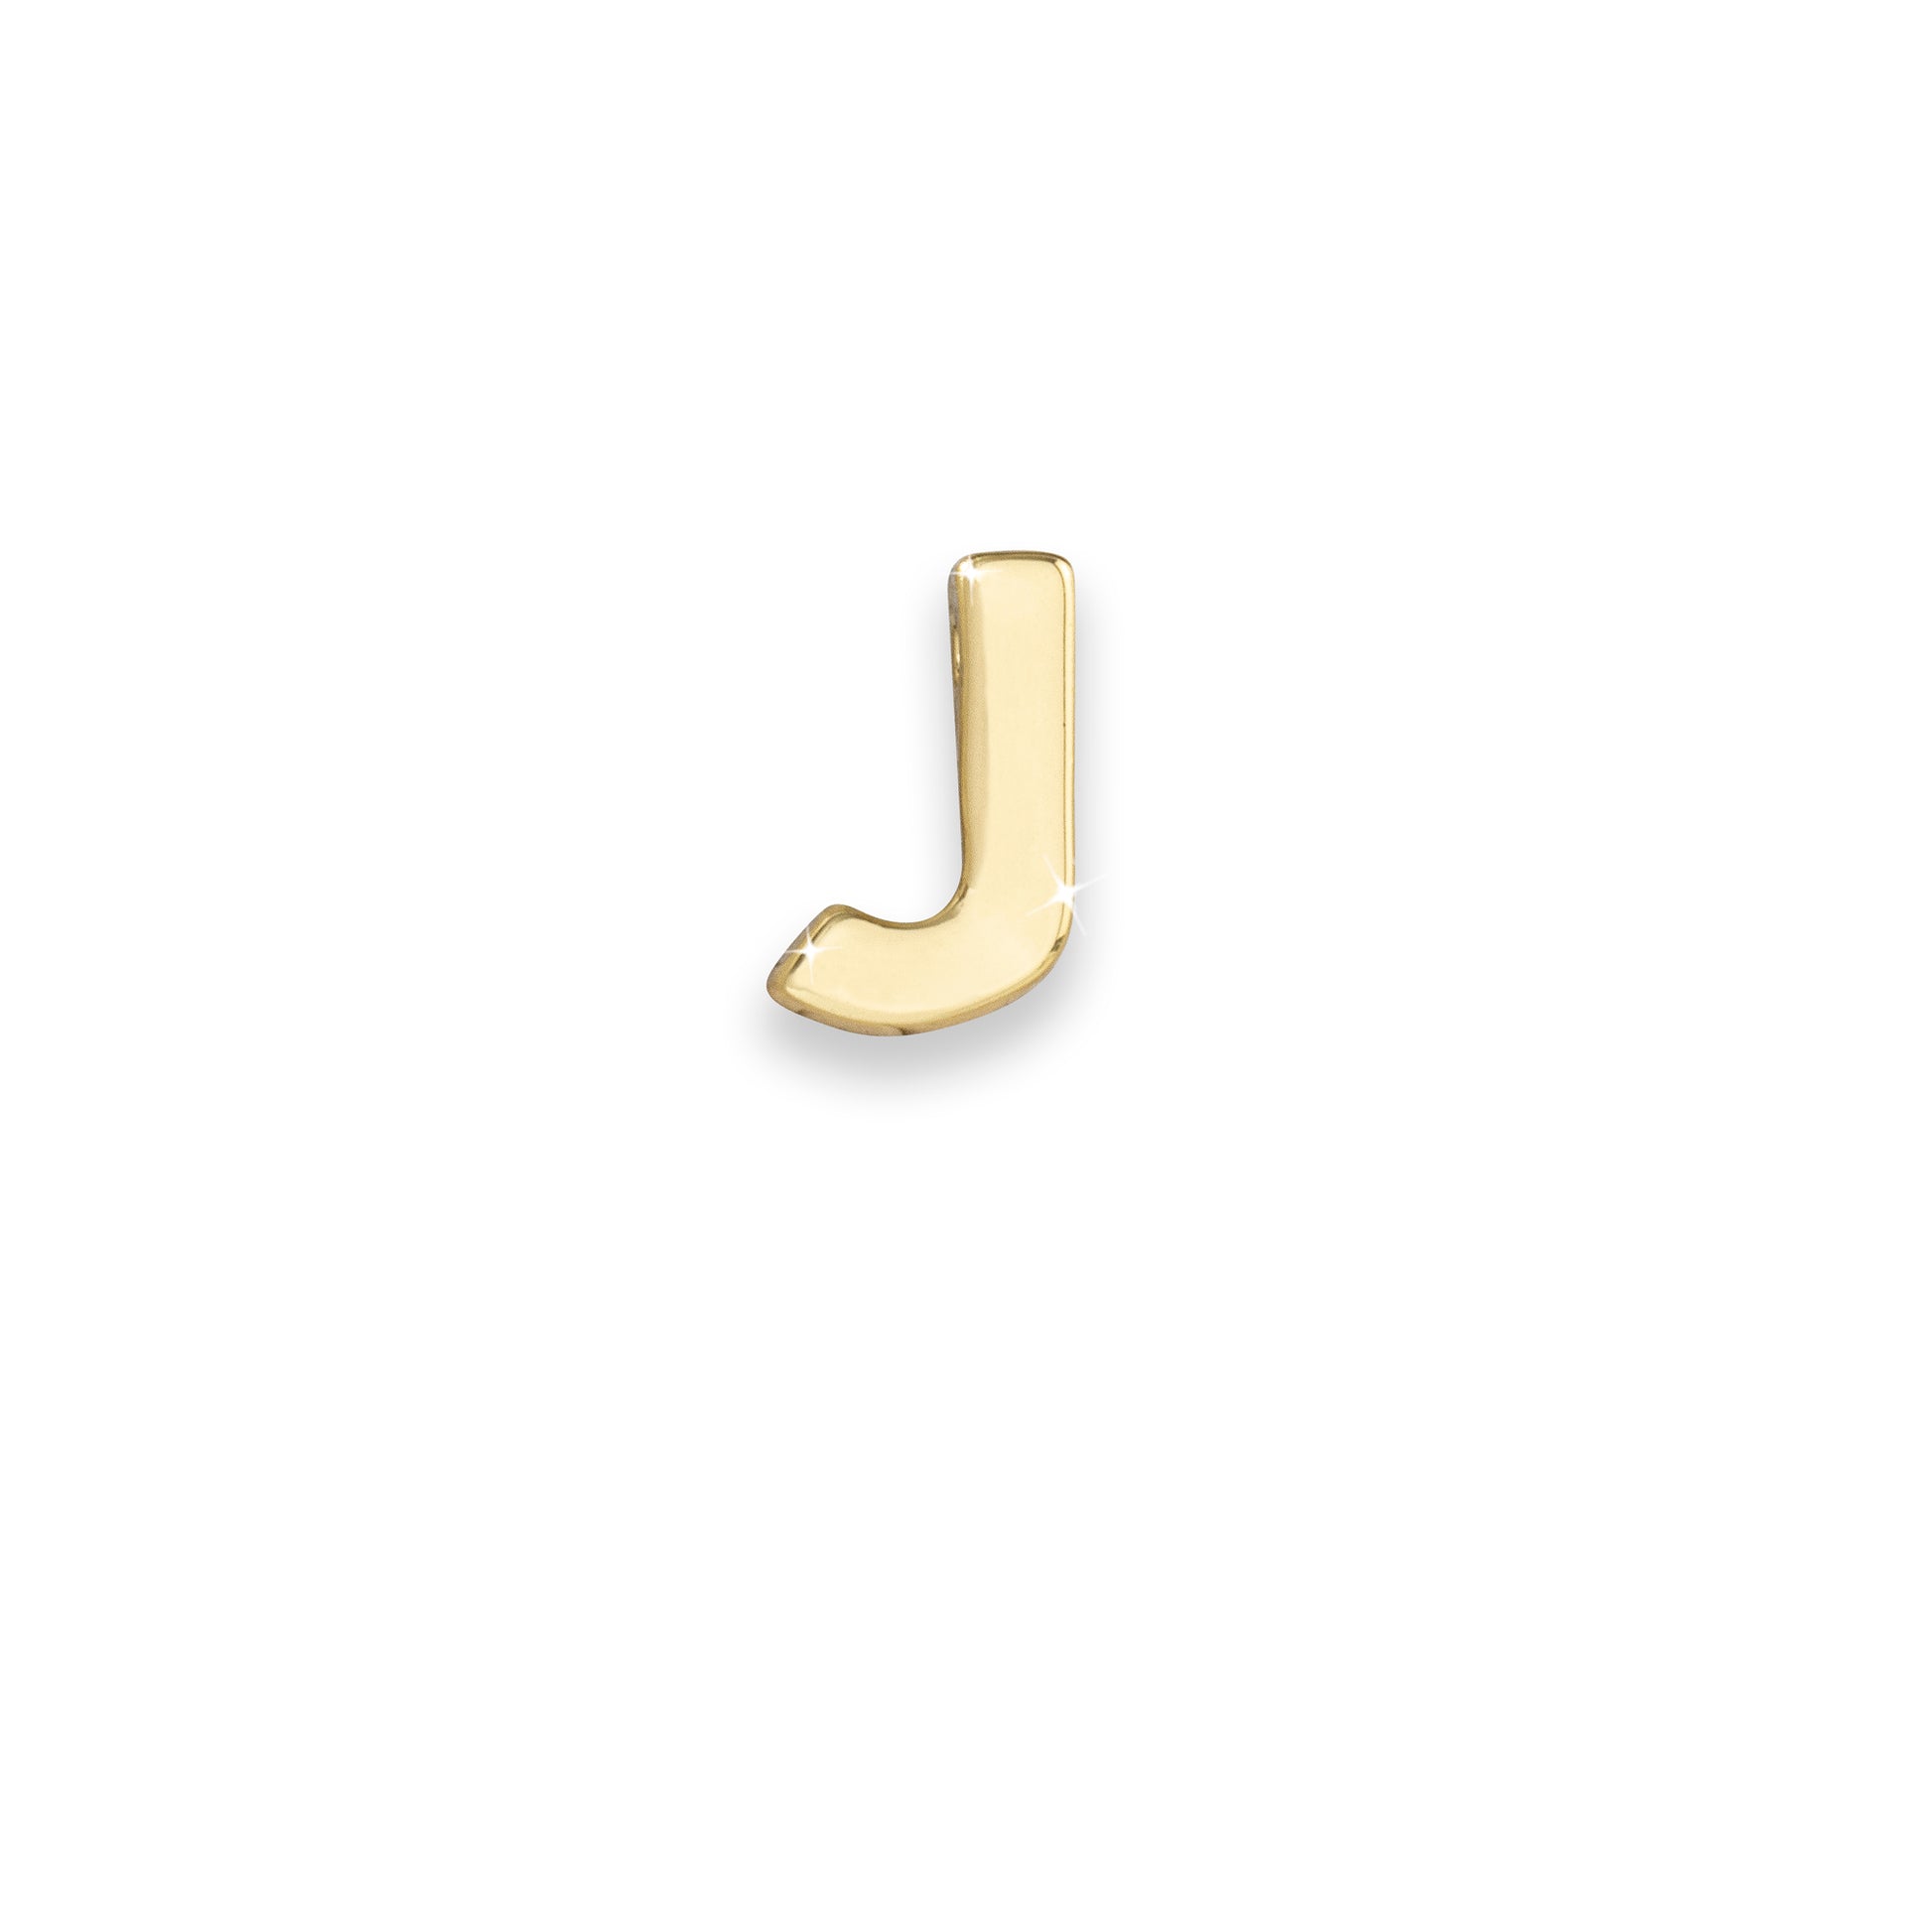 Gold letter J monogram charm for necklaces & bracelets